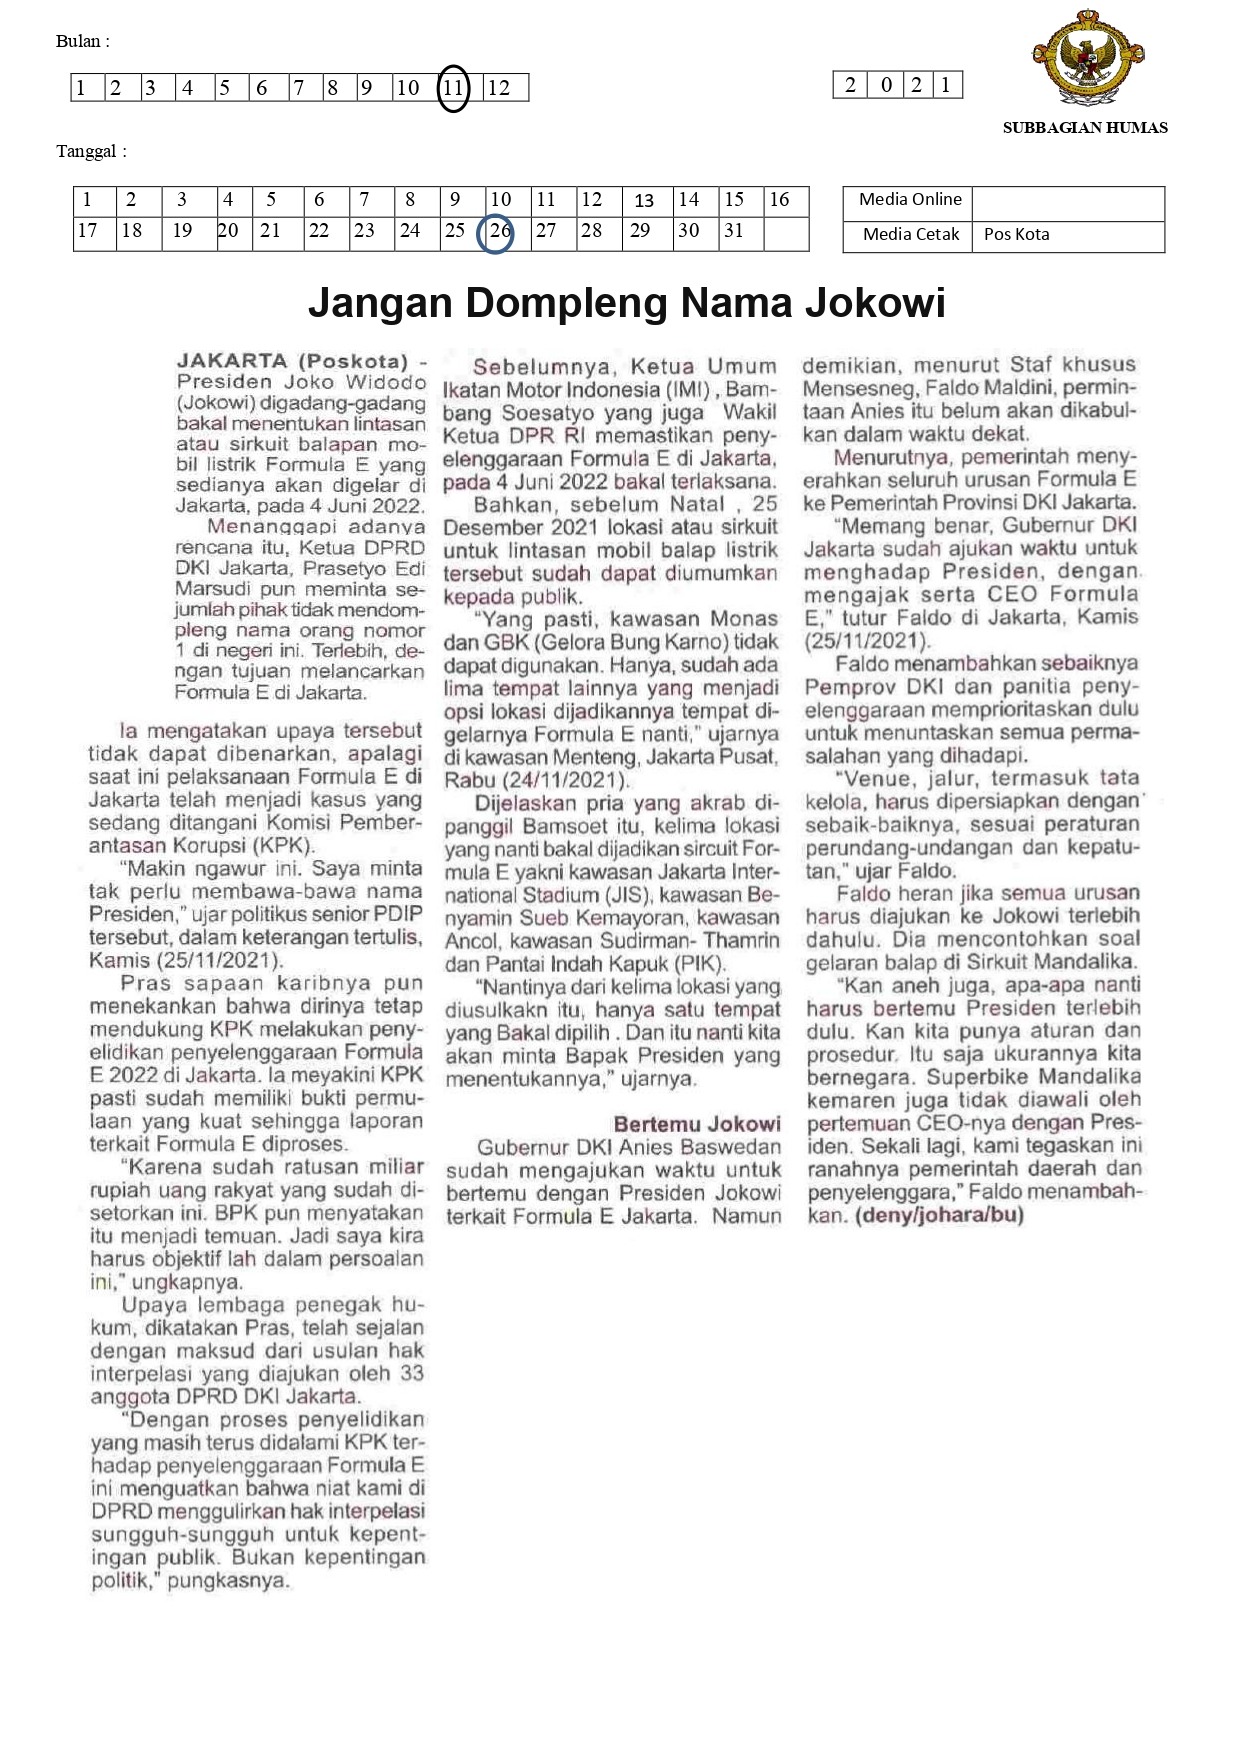 Jangan Dompleng Nama Jokowi